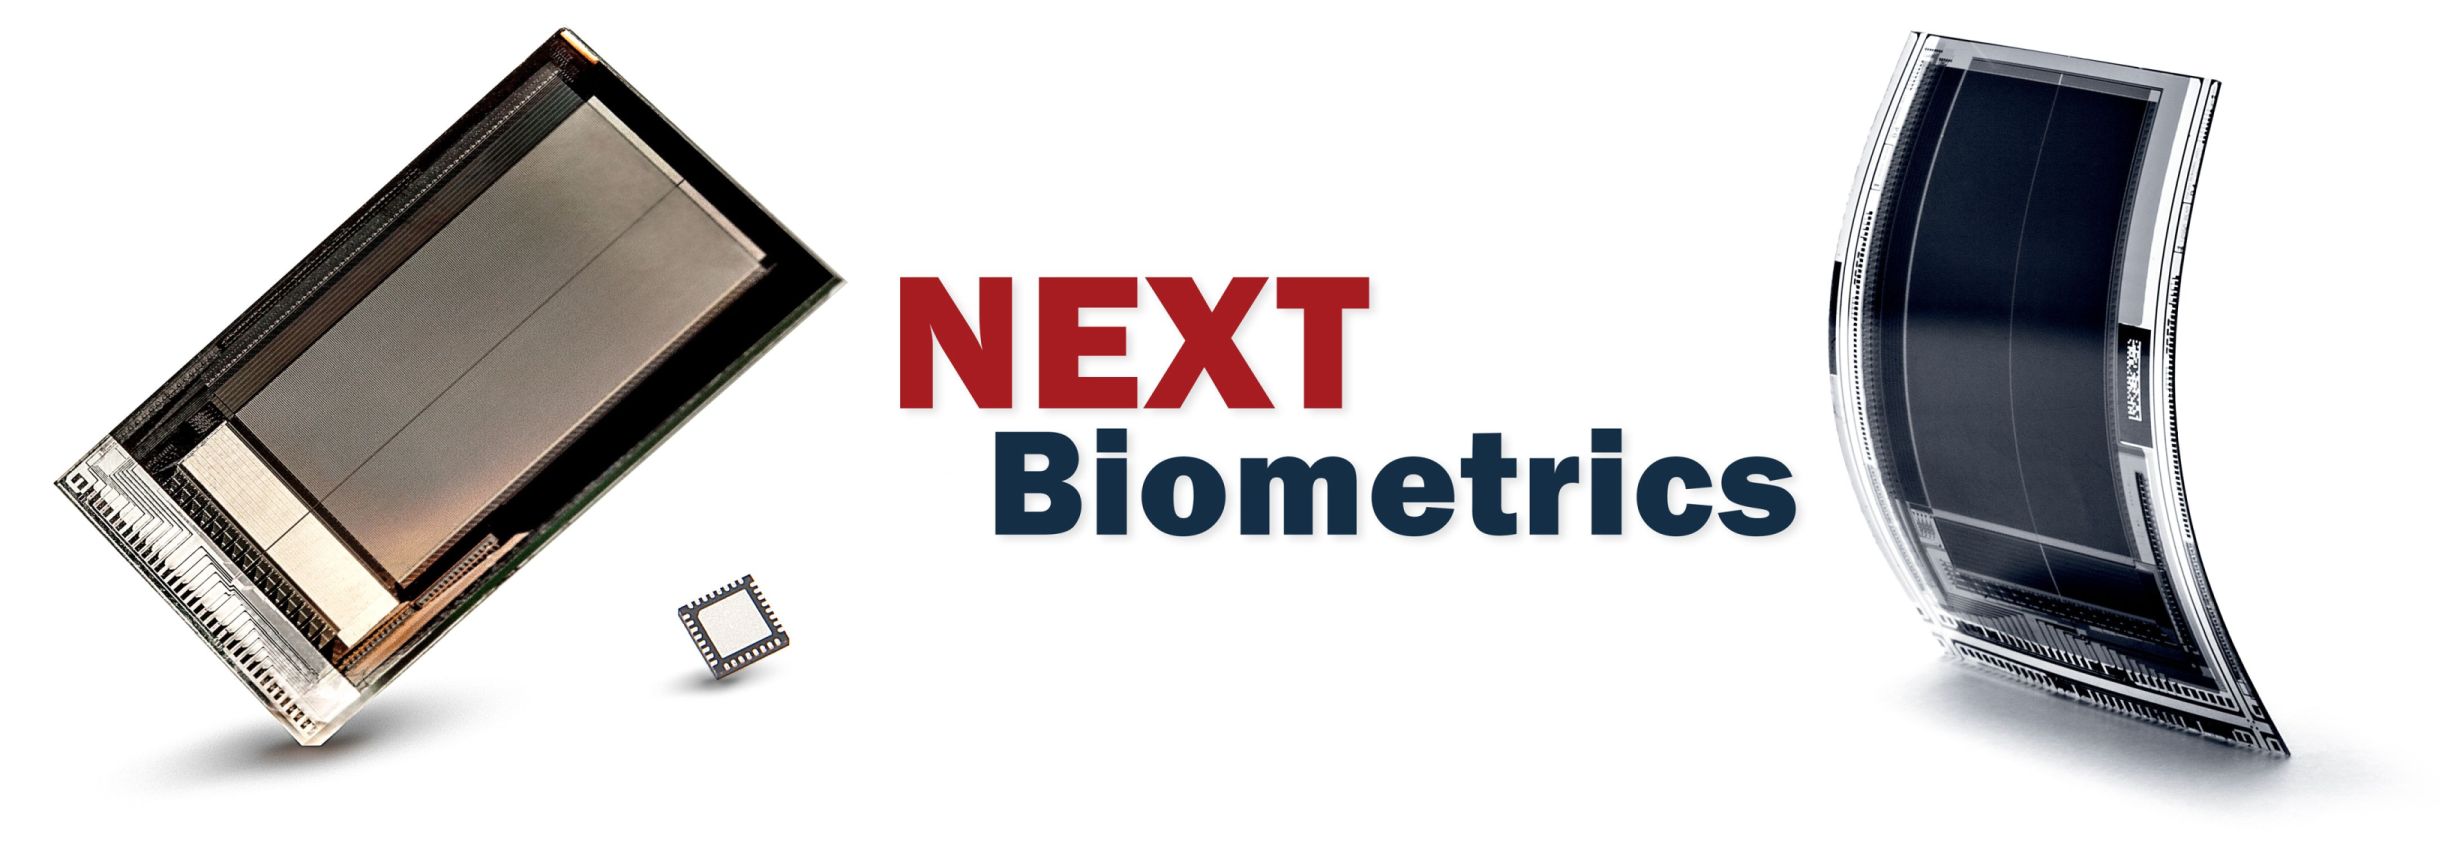 NEXT Biometrics join